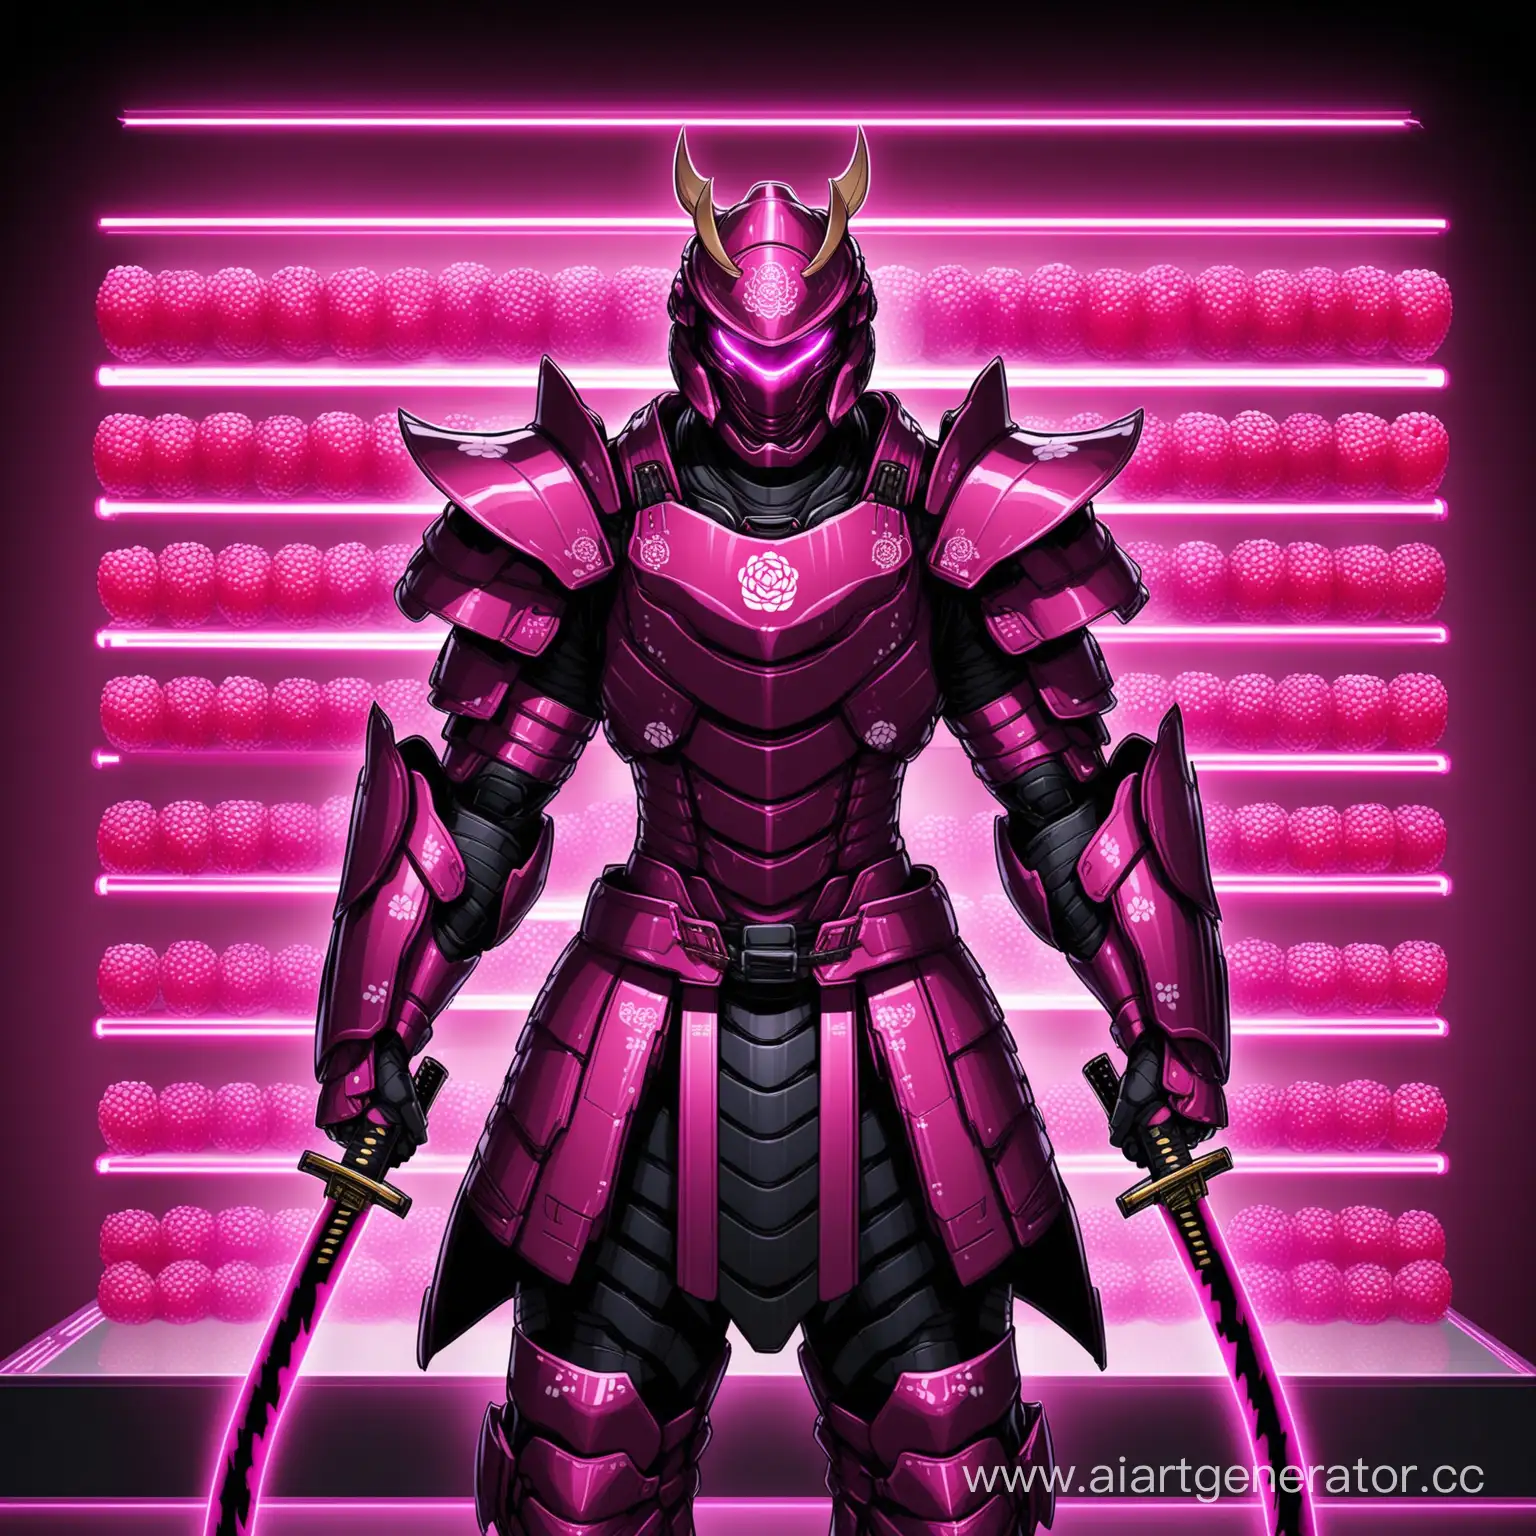 Futuristic-Samurai-Warrior-in-Cyber-Armor-with-Energy-Katanas-and-Raspberry-Display